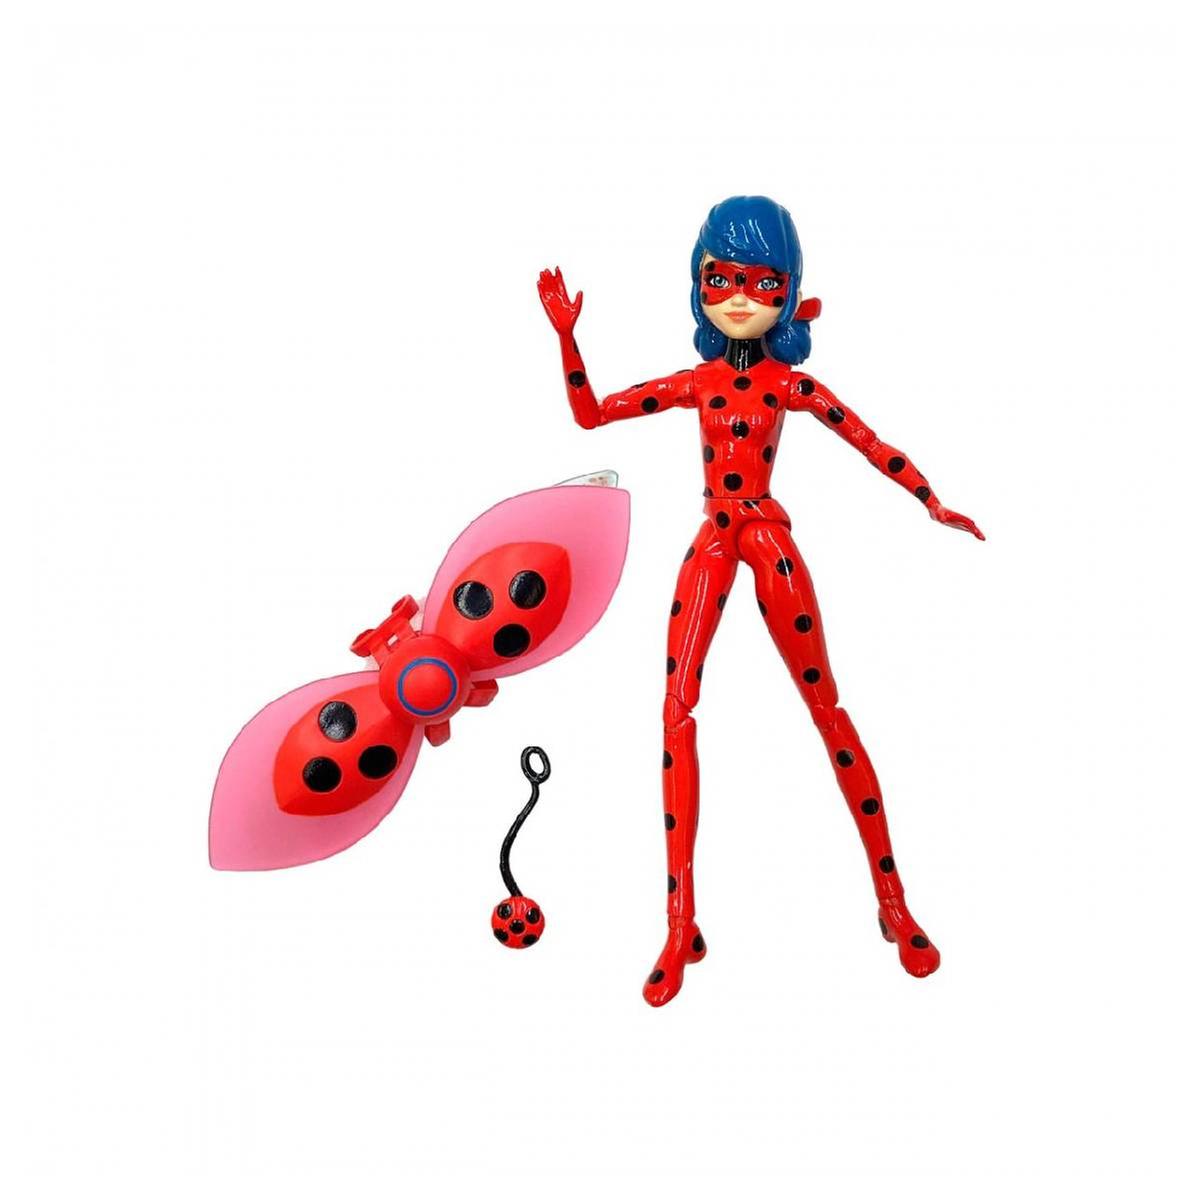 Ladybug - Figuras articuladas Ladybug y Catnoir